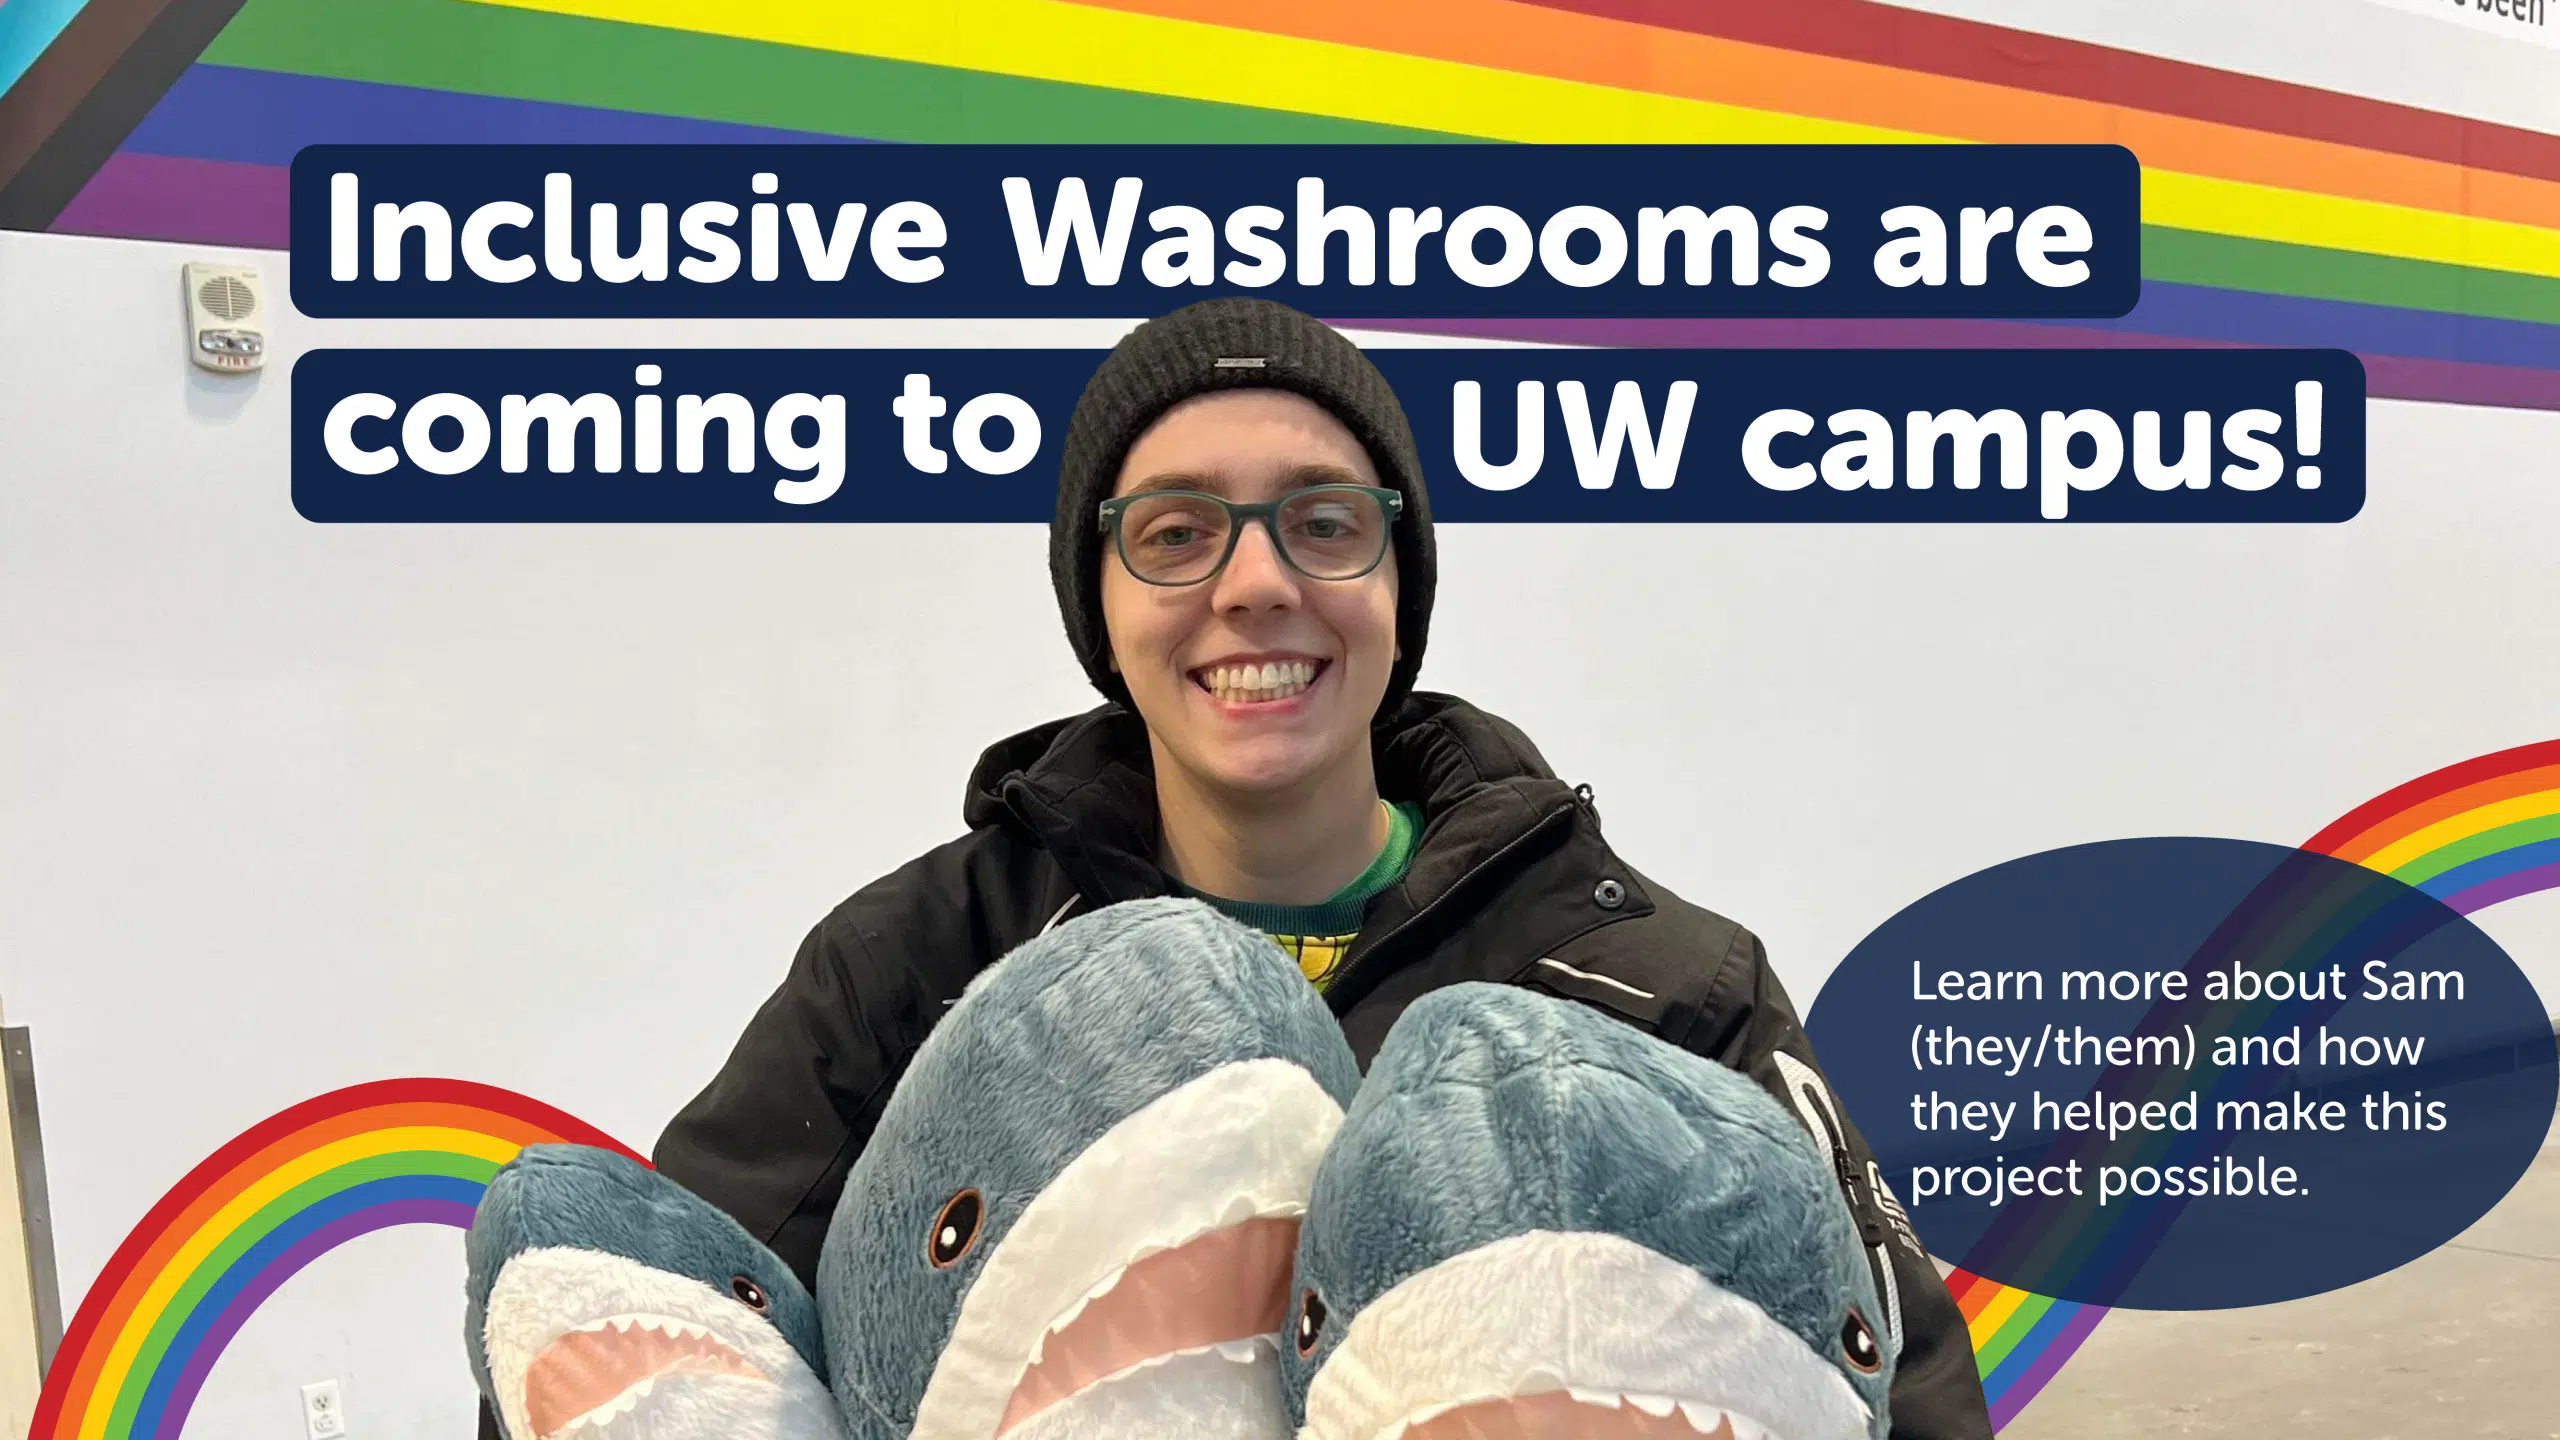 Inclusive washrooms are coming to UW campus!